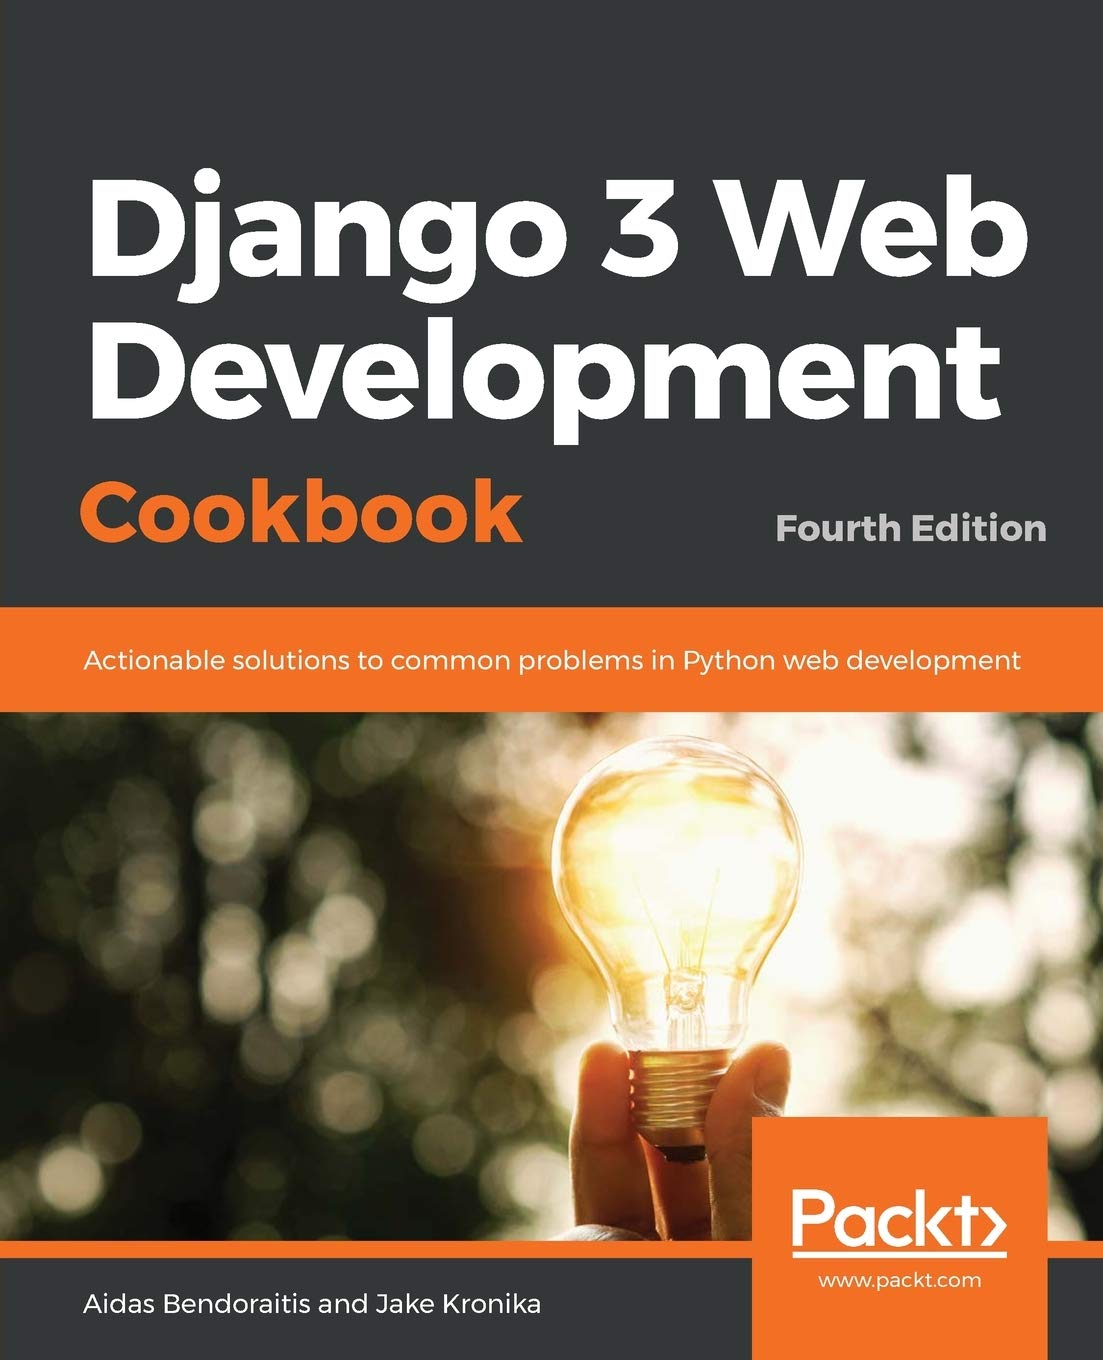 Django 3 Web Development Cookbook - Fourth Edition